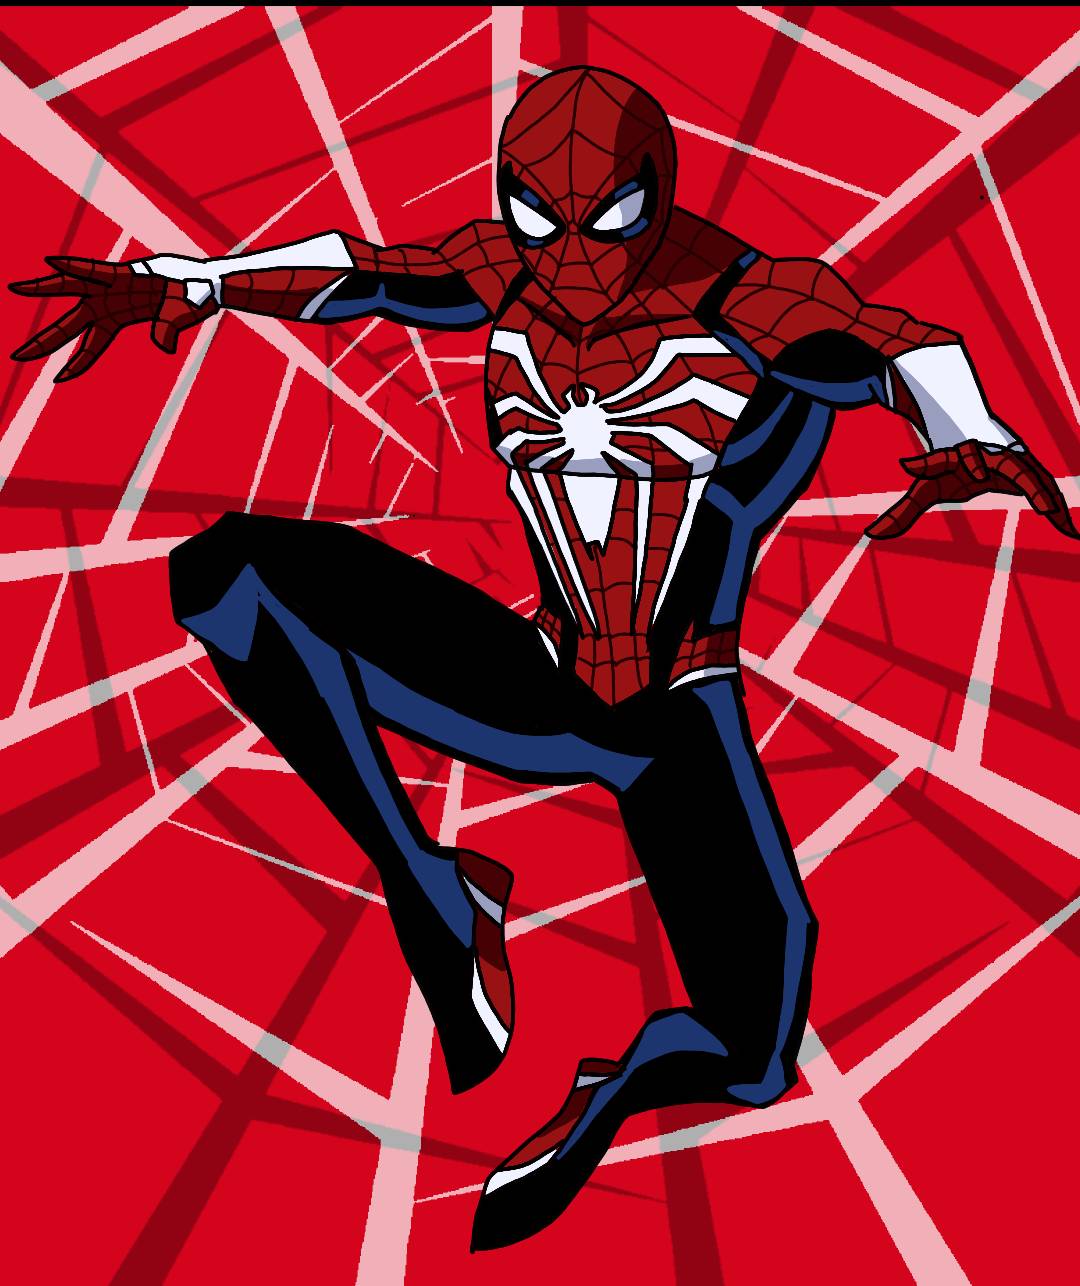 Spiderman PS5 style Avengers EMH by yostverseeditsmarvel on DeviantArt